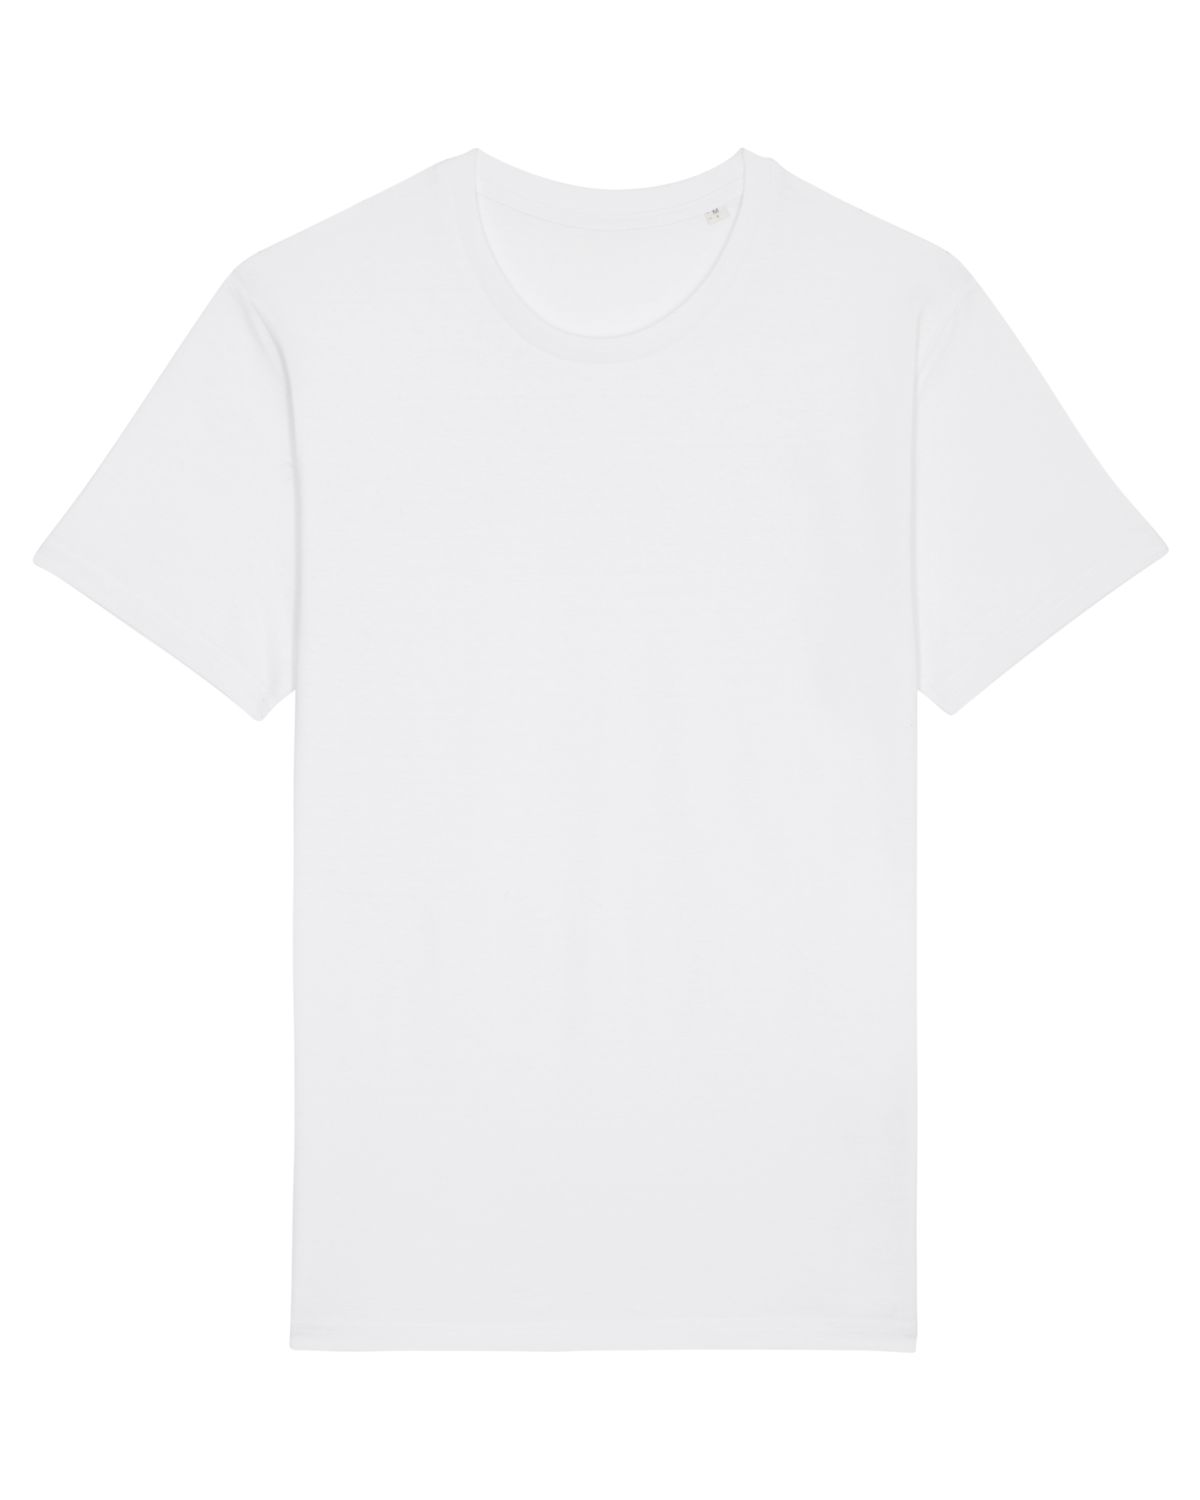 758 Camiseta corte estándar 150 gms 100% algodón orgánico 🌿